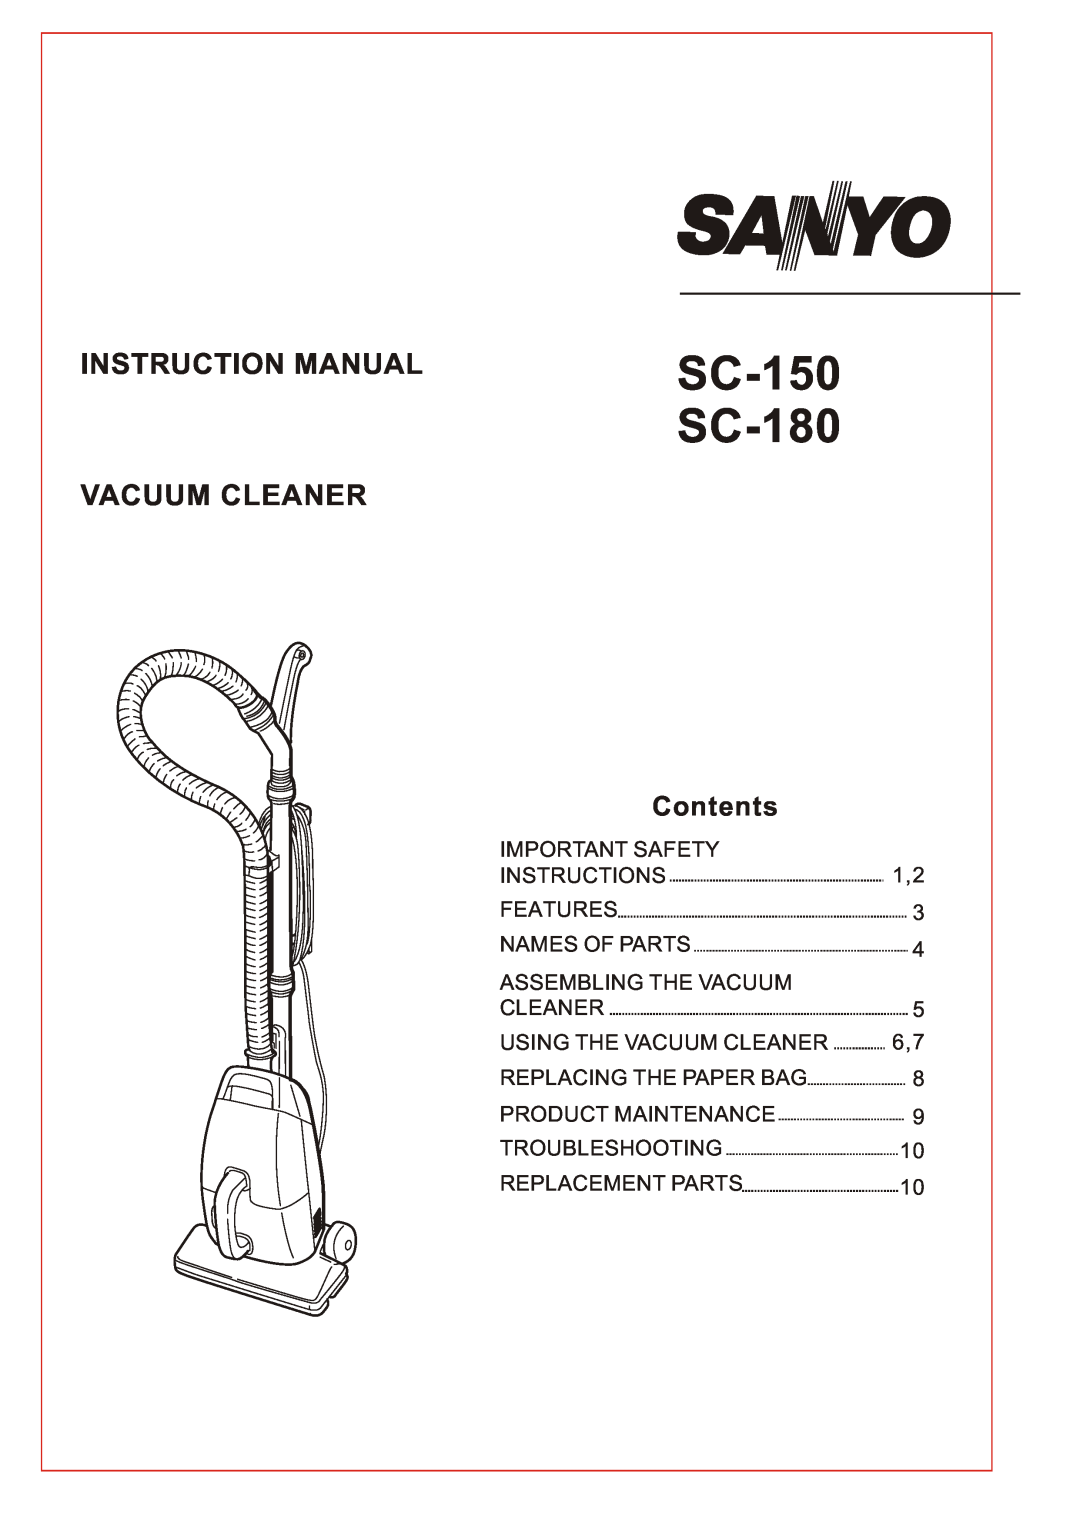 Sanyo instruction manual Contents, SC-150 SC-180 